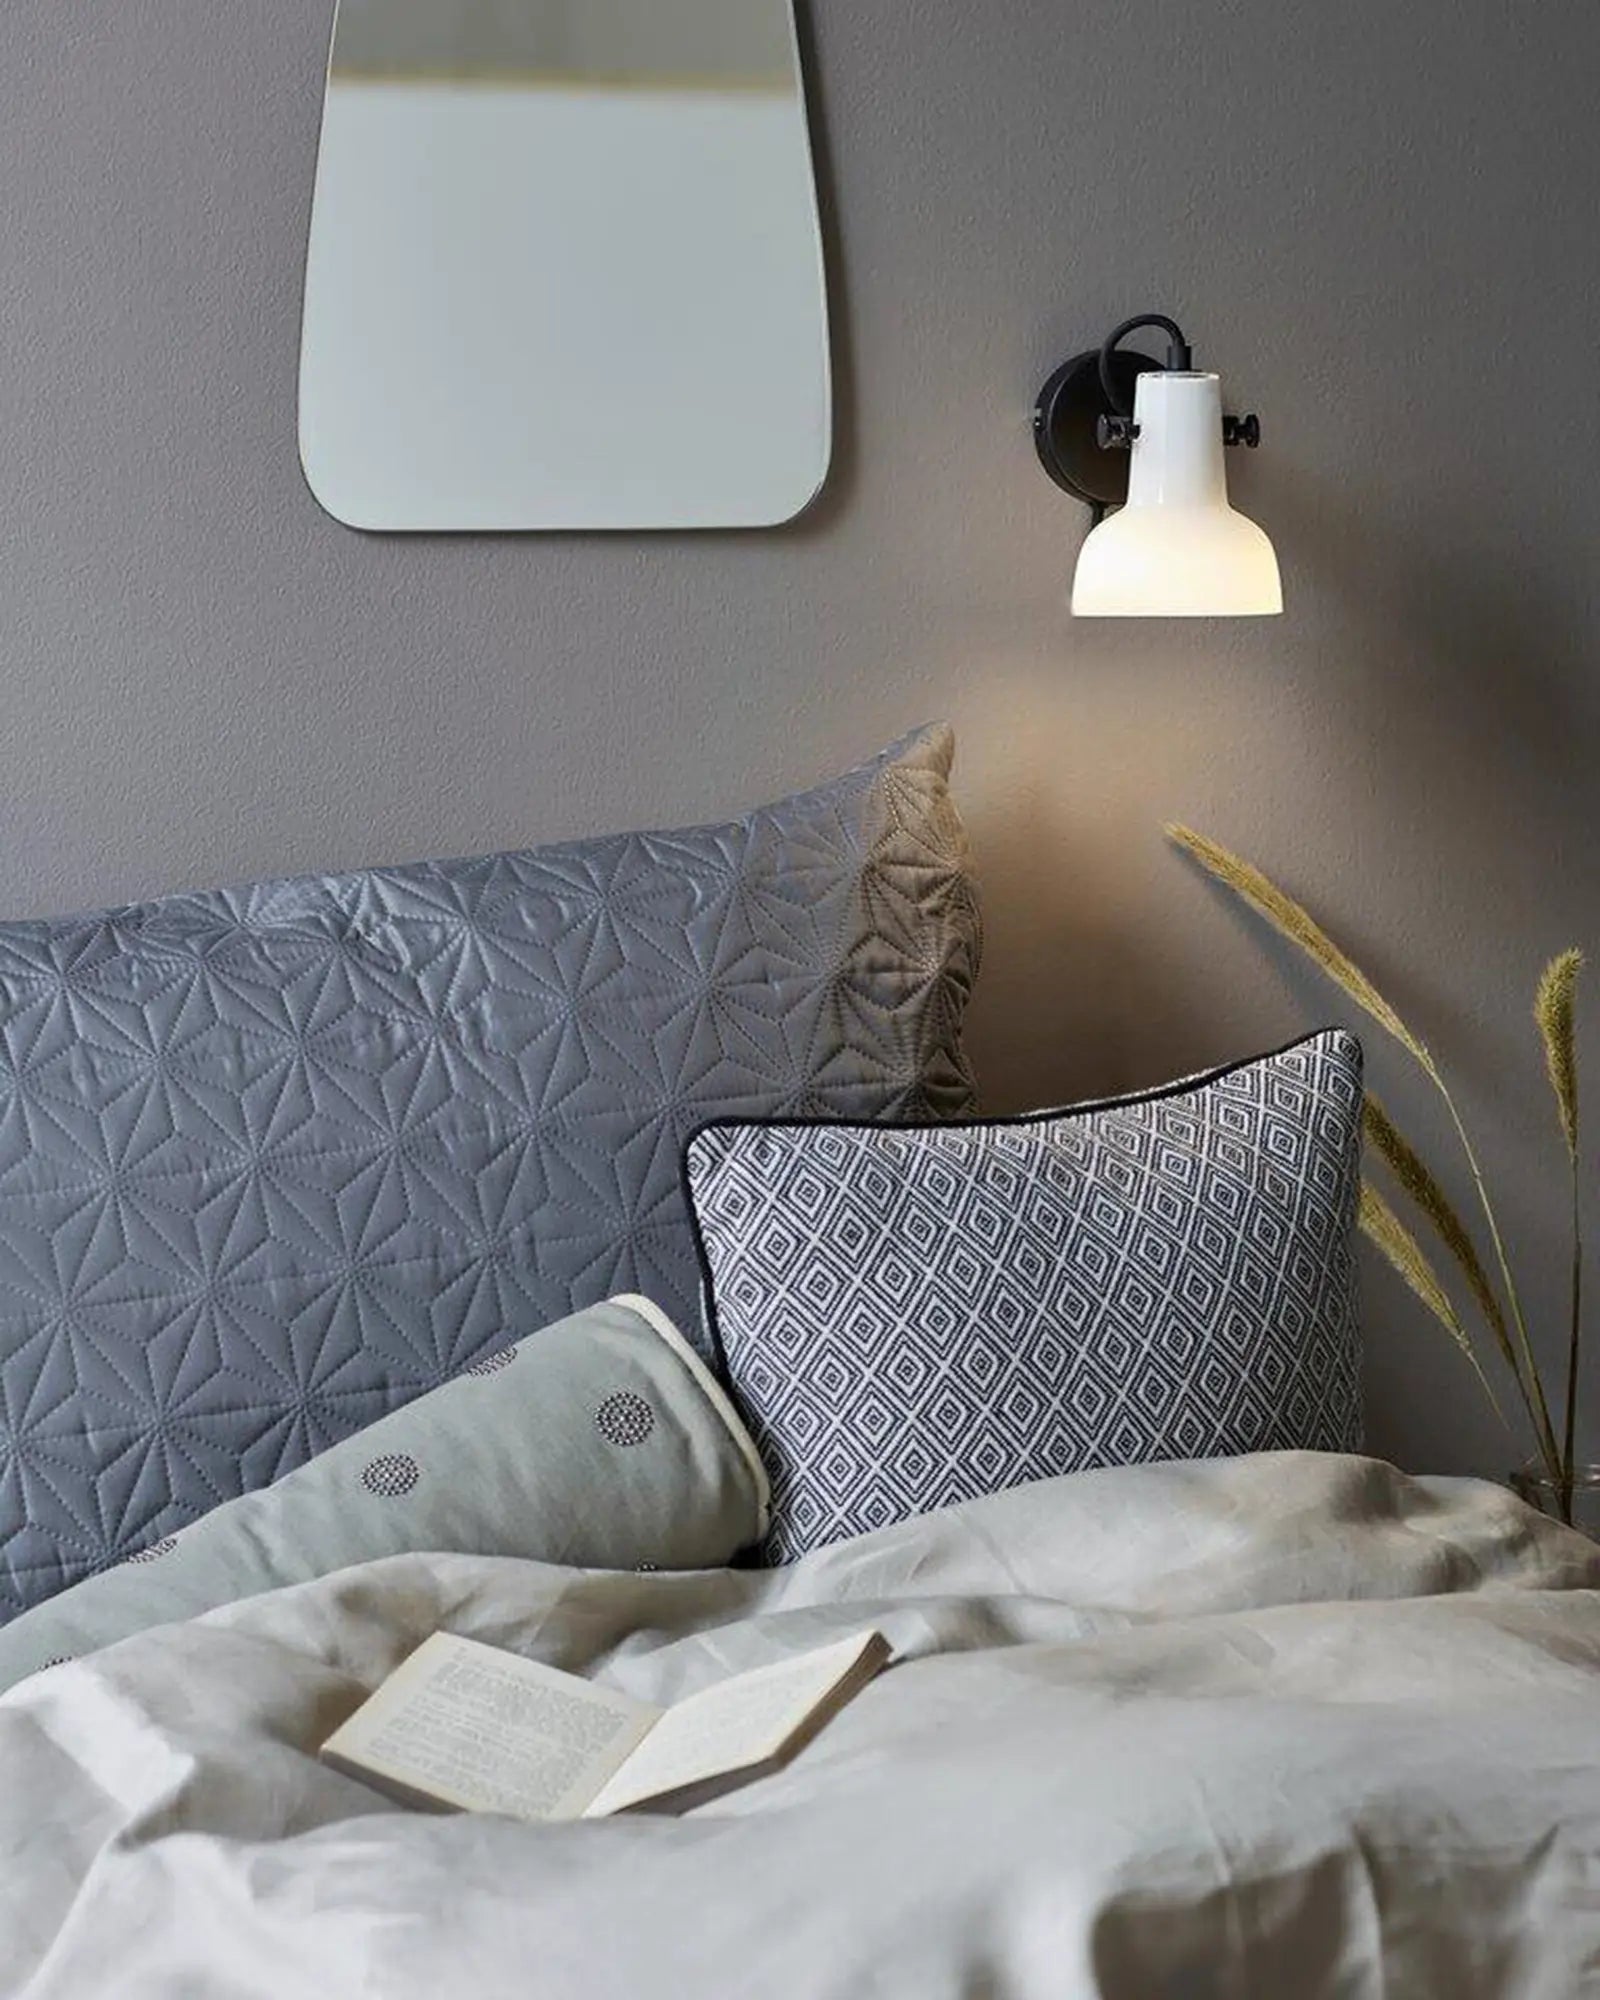 Parson adjustable wall light in a bedroom